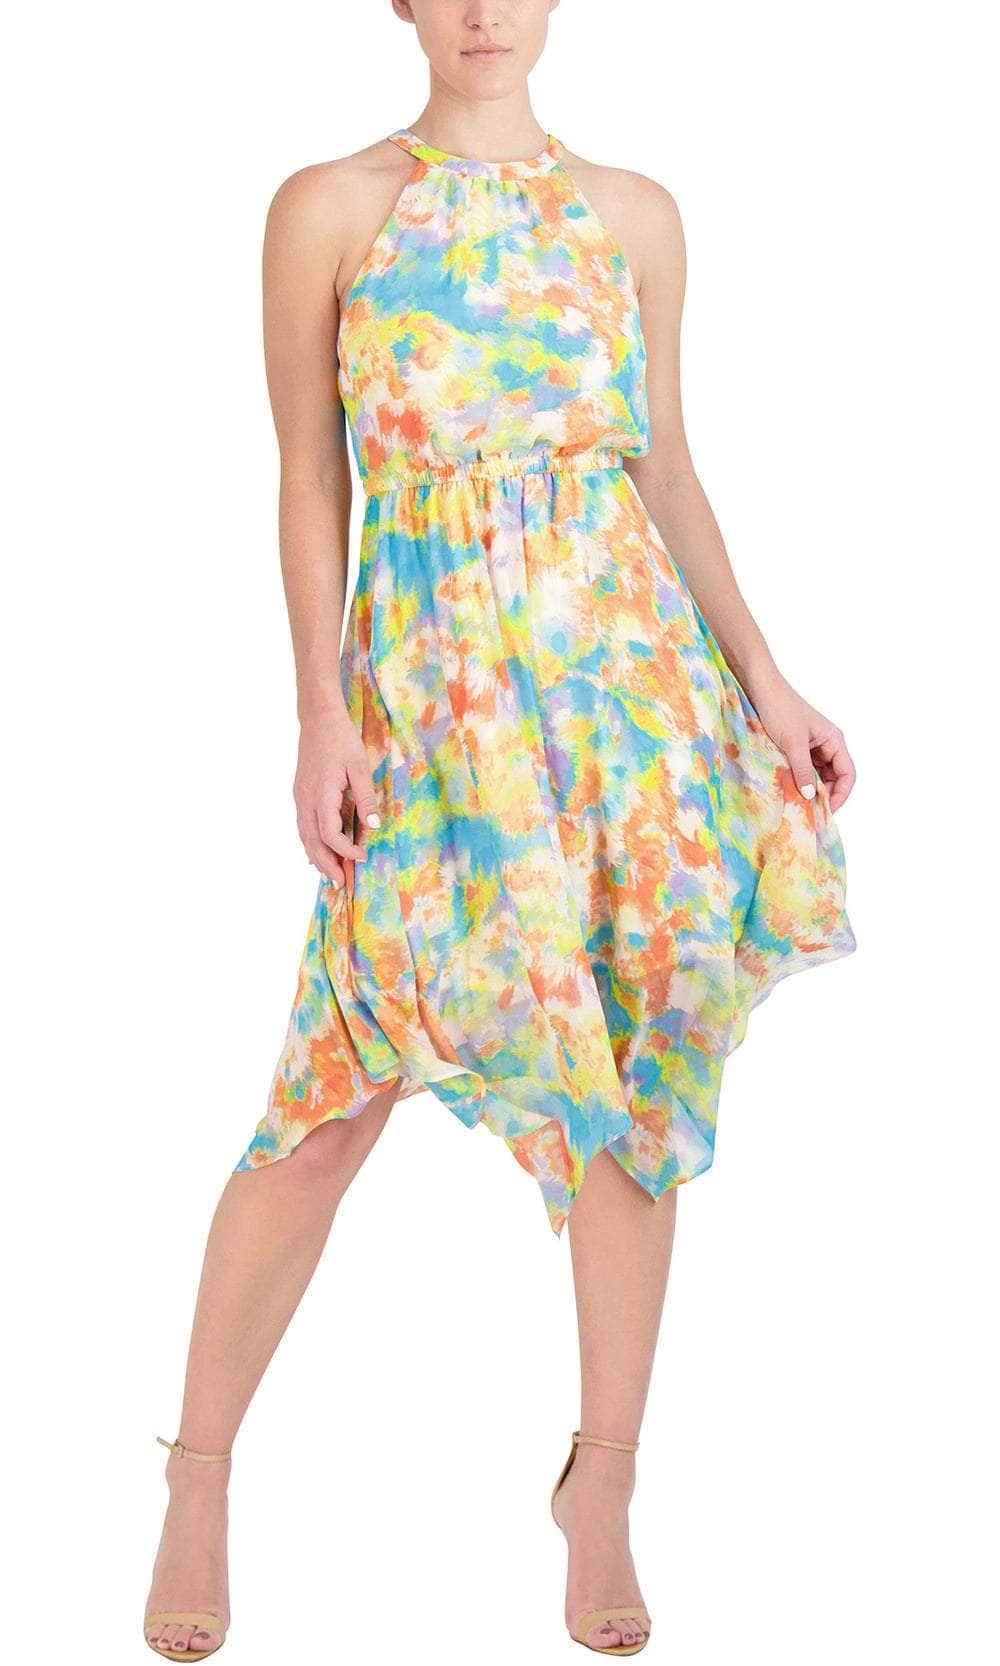 BCBG Generation GV01D72 - Halter Print Short Dress Cocktail Dresses XS / Tie Dye